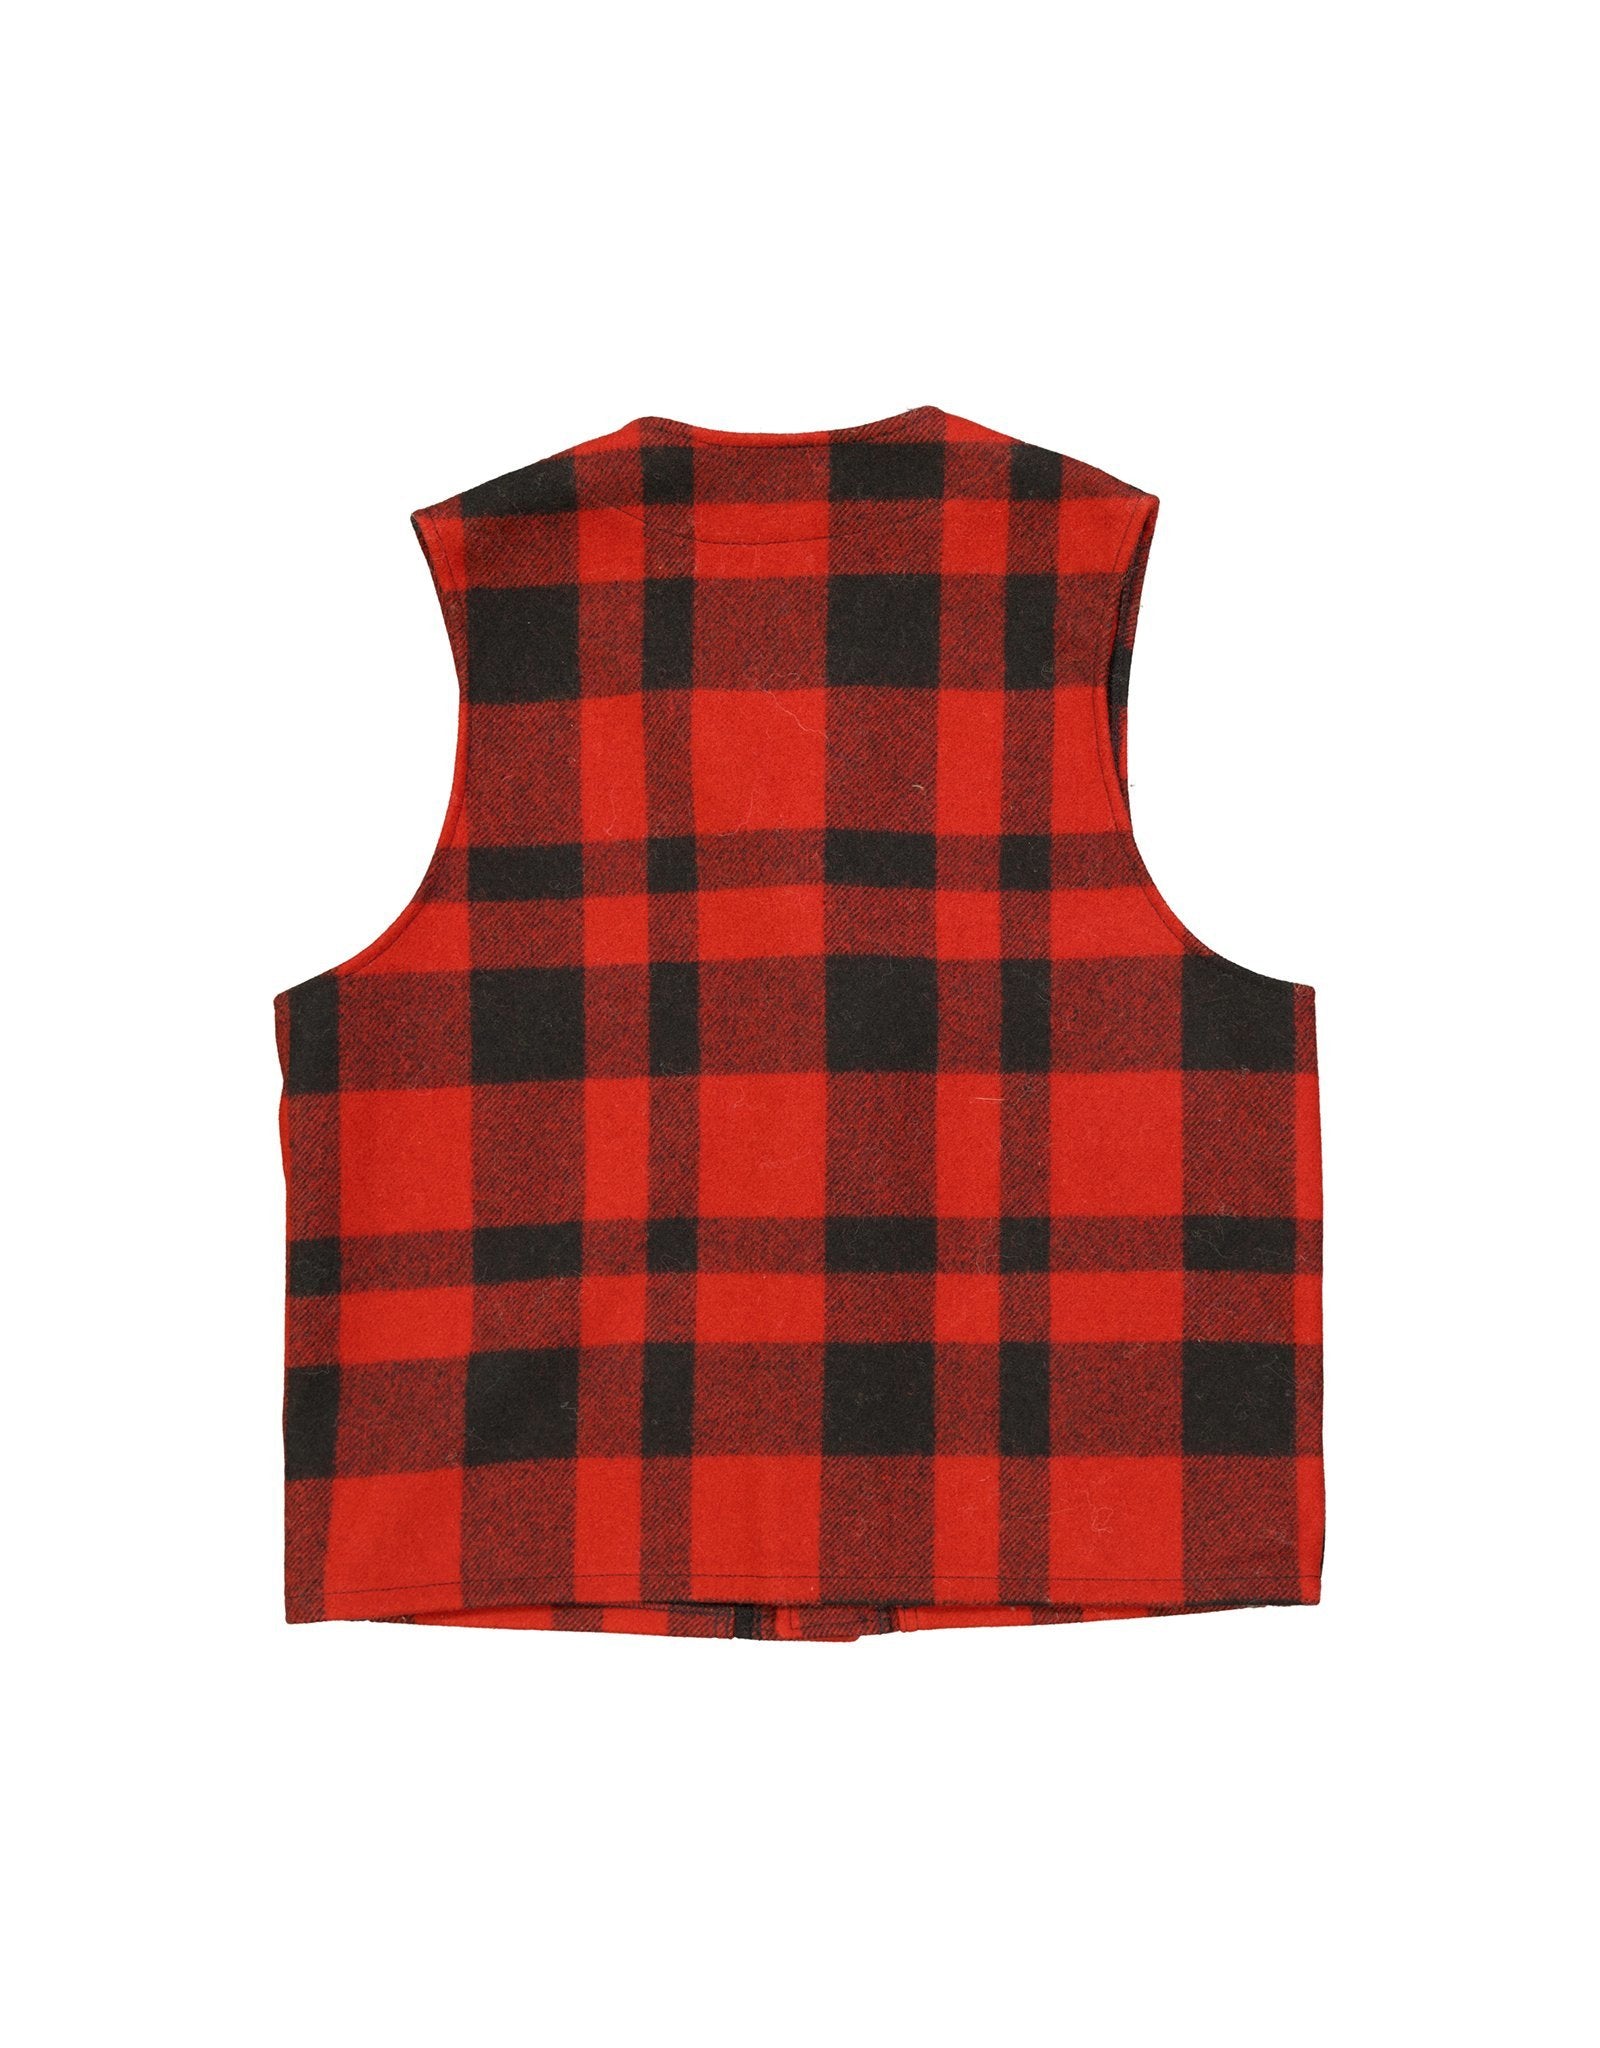 Filson 100% Virgin Wool Plaid Red Men's Vest, Size 42